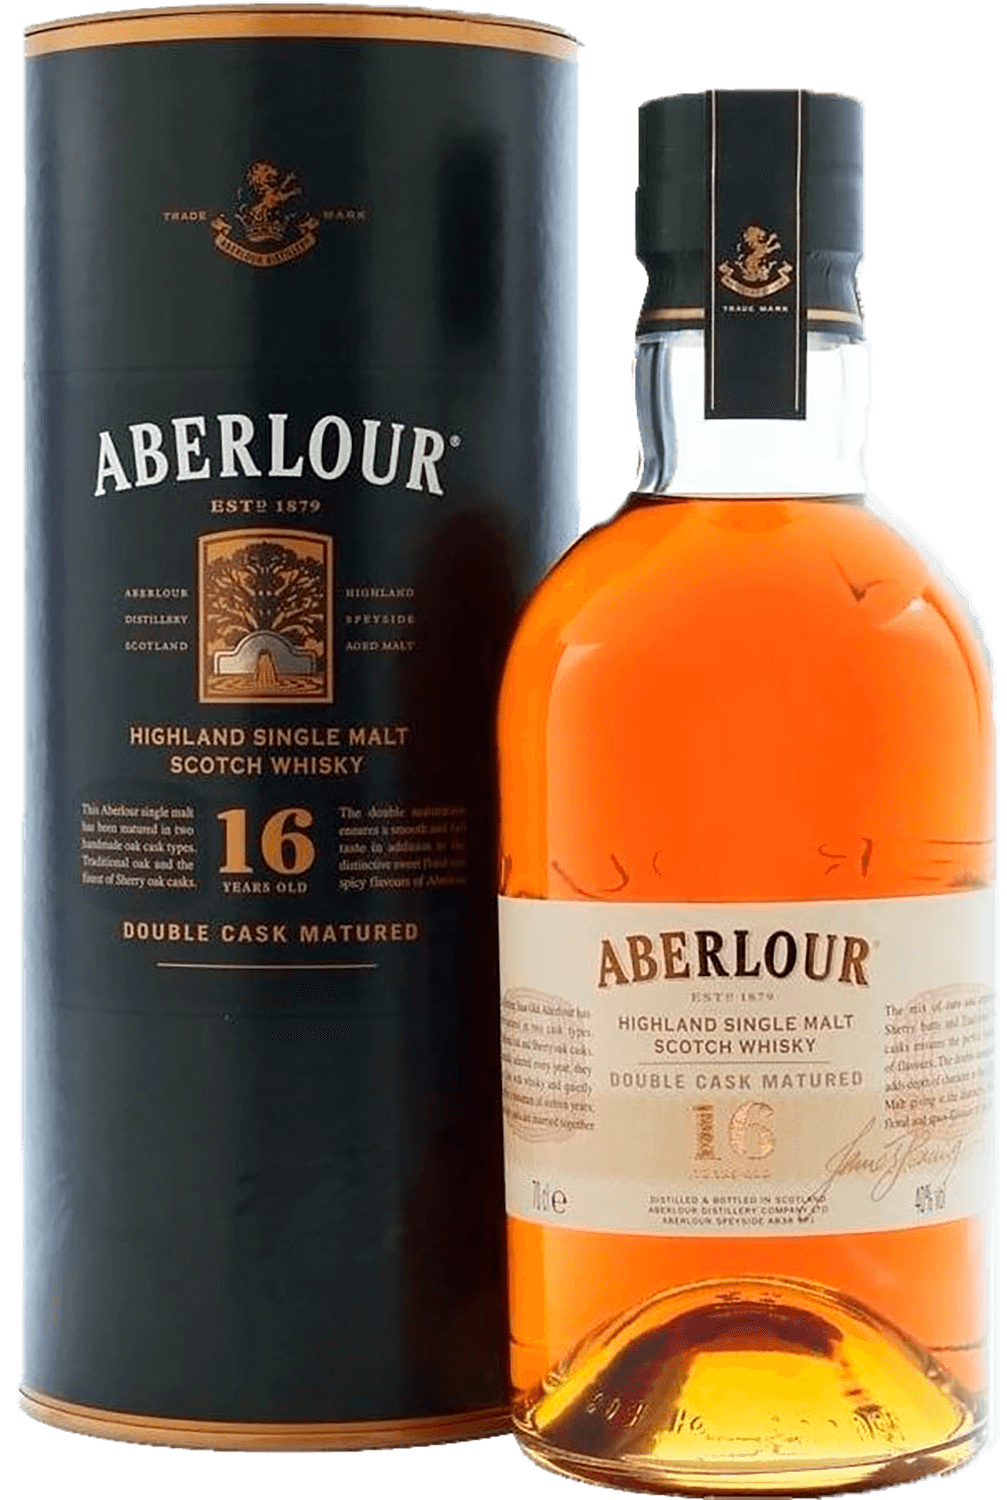 Aberlour Double Cask Matured Highland Single Malt Scotch Whisky 16 y.o. (gift box)